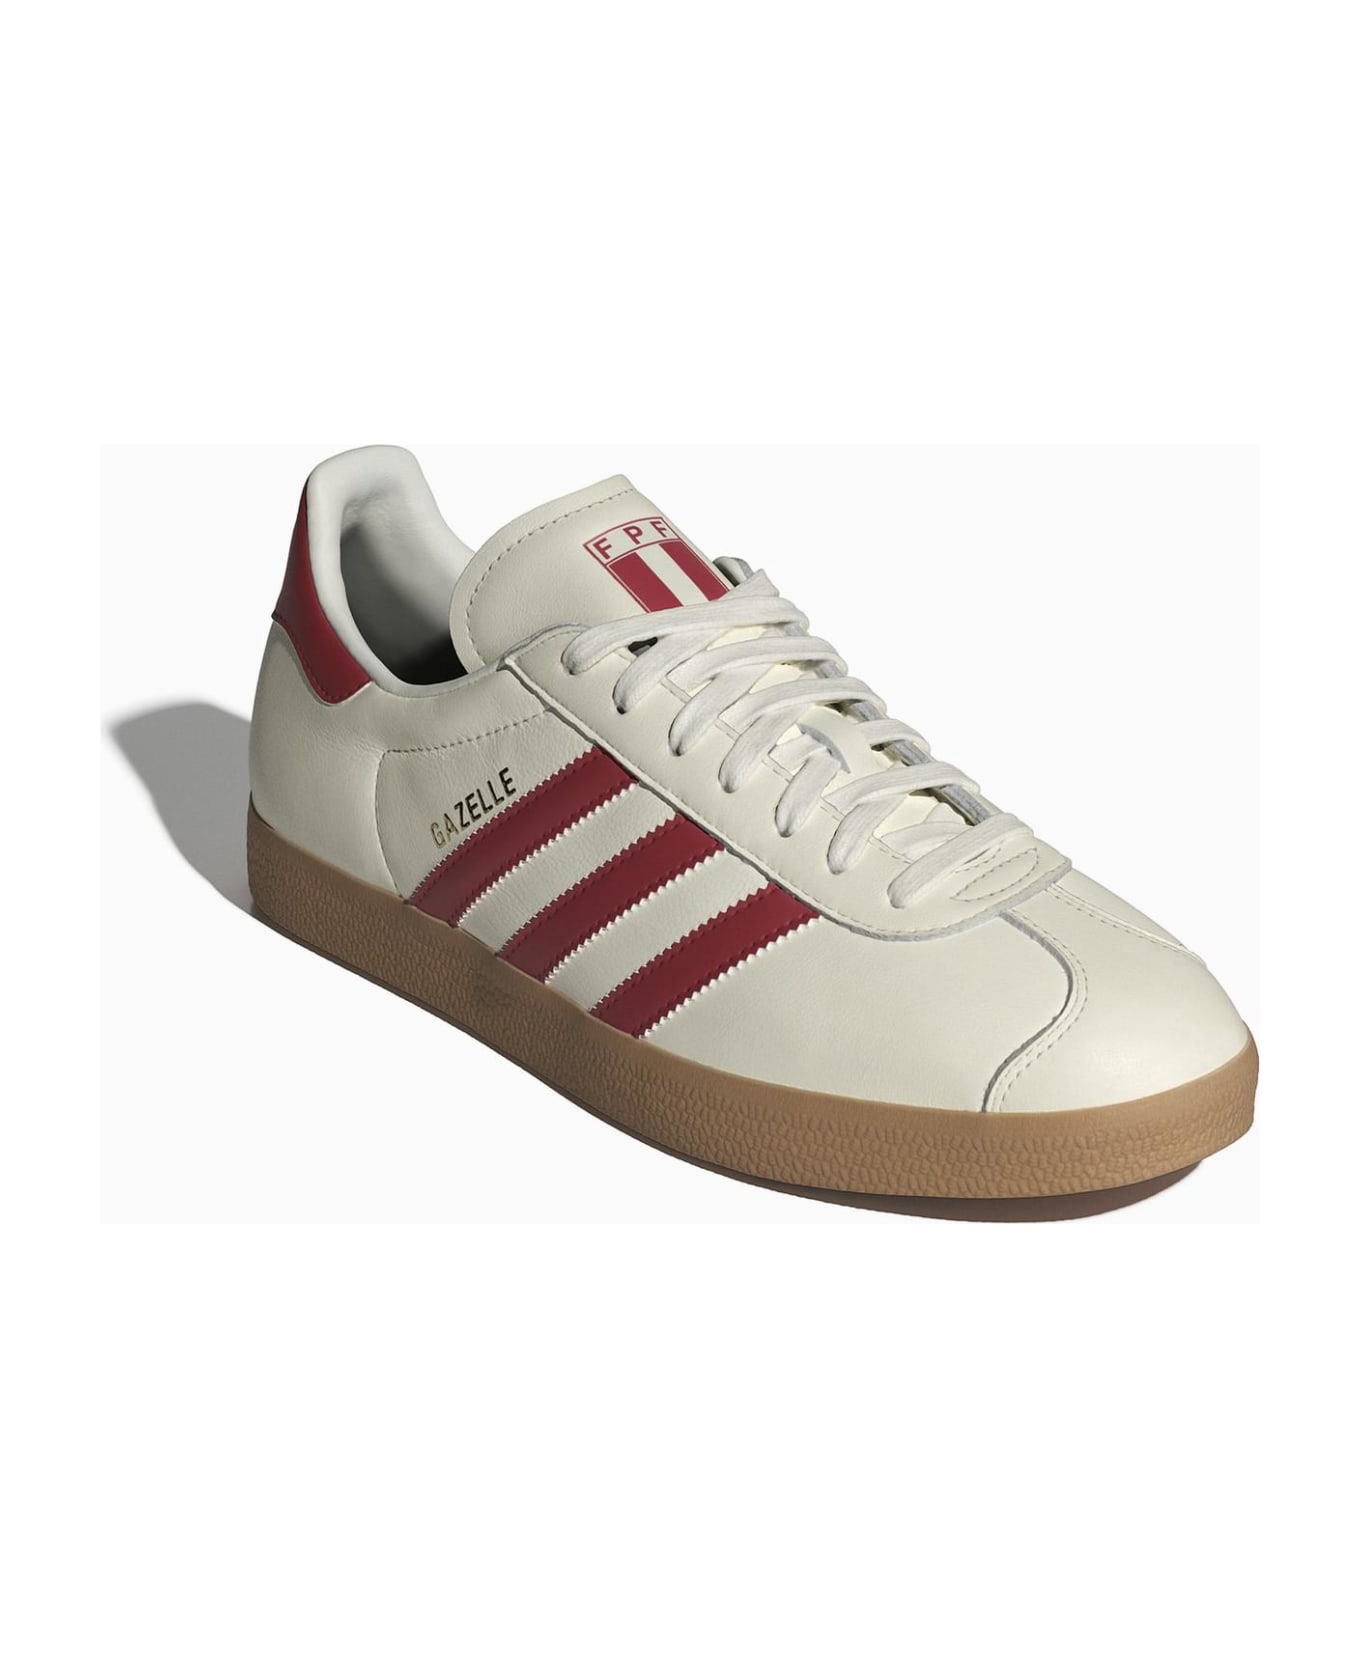 Adidas Originals Gazelle White\/red Sneakers - Ivory